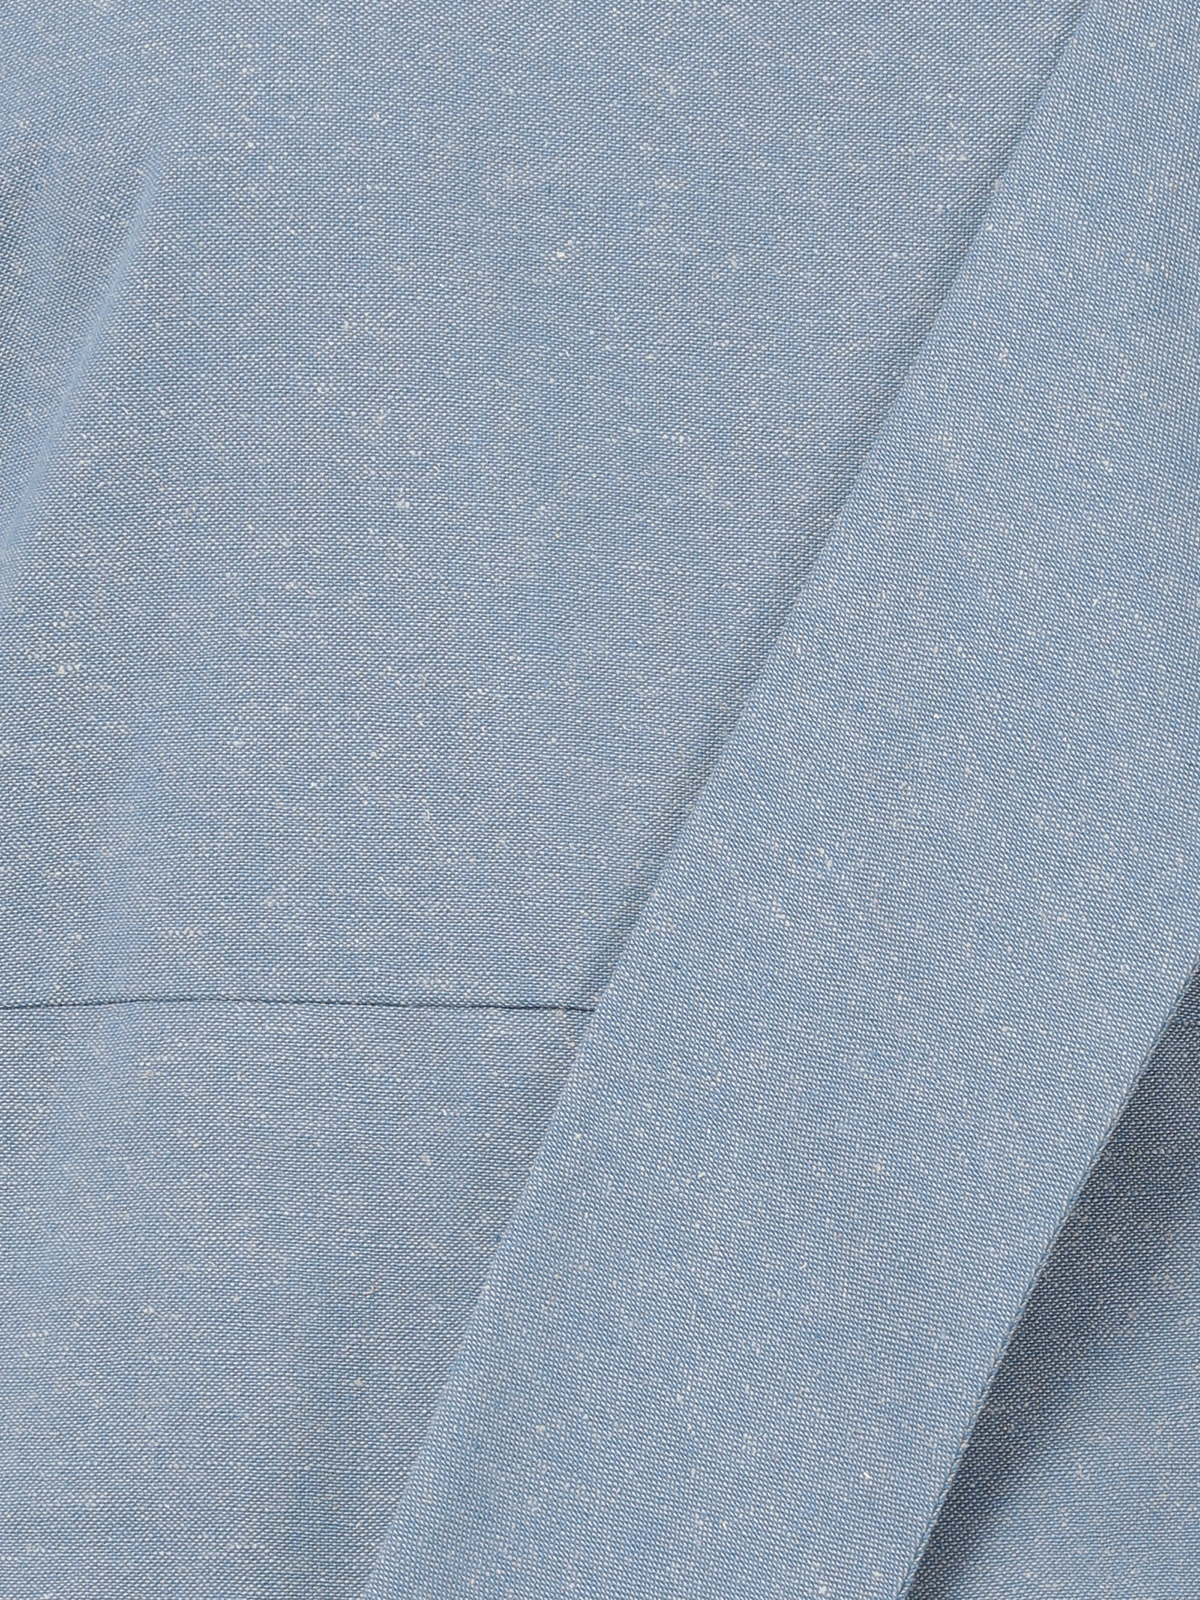 Smart Blue Cotton Linen Round Neck One Piece Dress